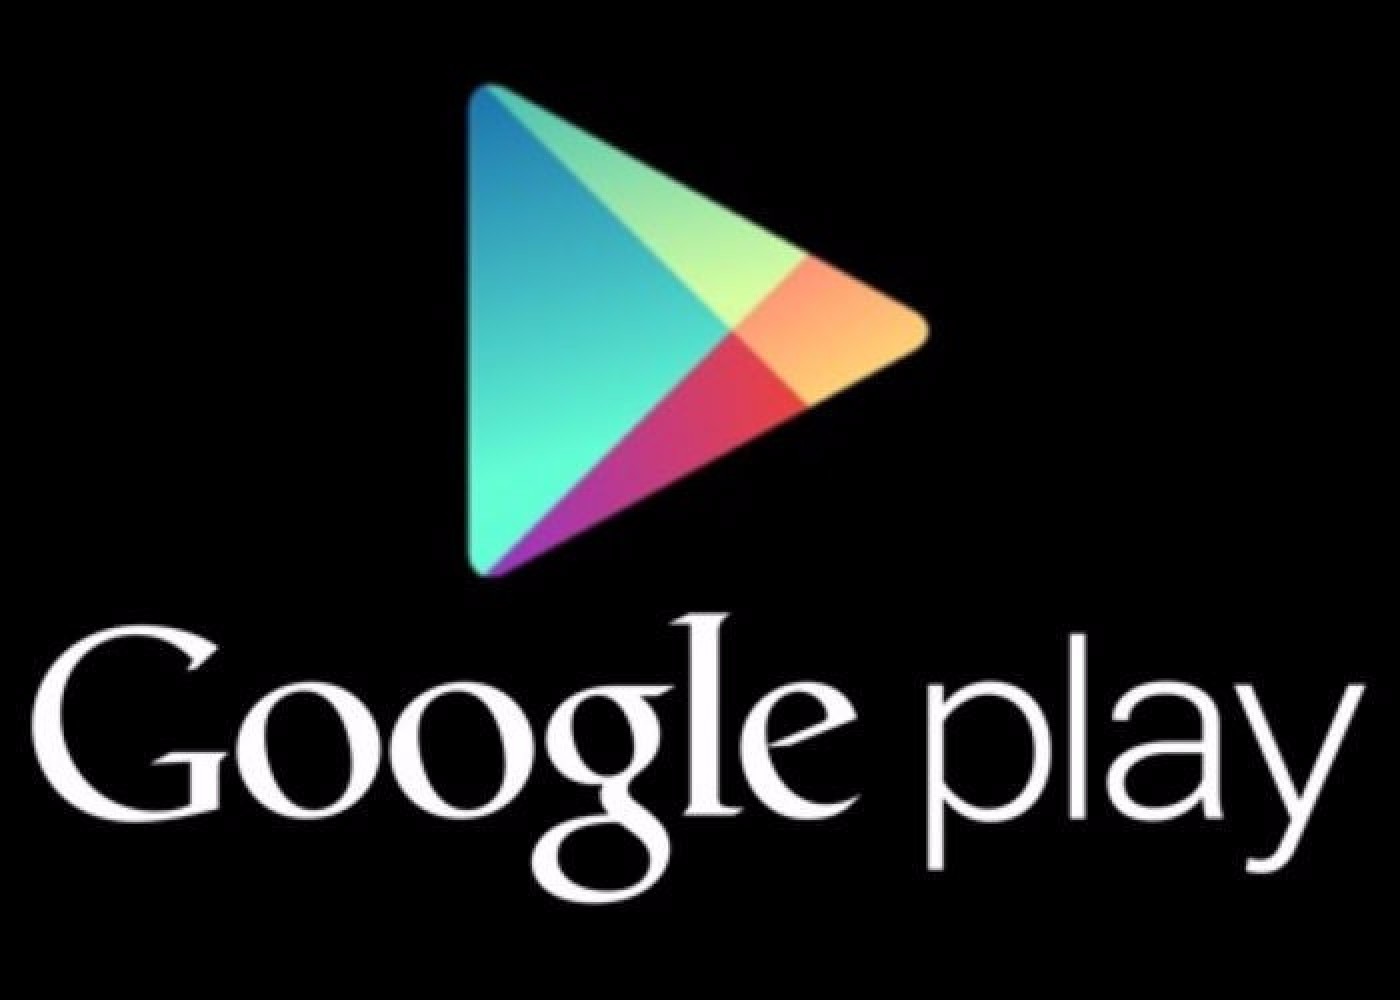 Google play up. Google Play. Google Play картинка. Эмблема гугл плей. On Google Play.